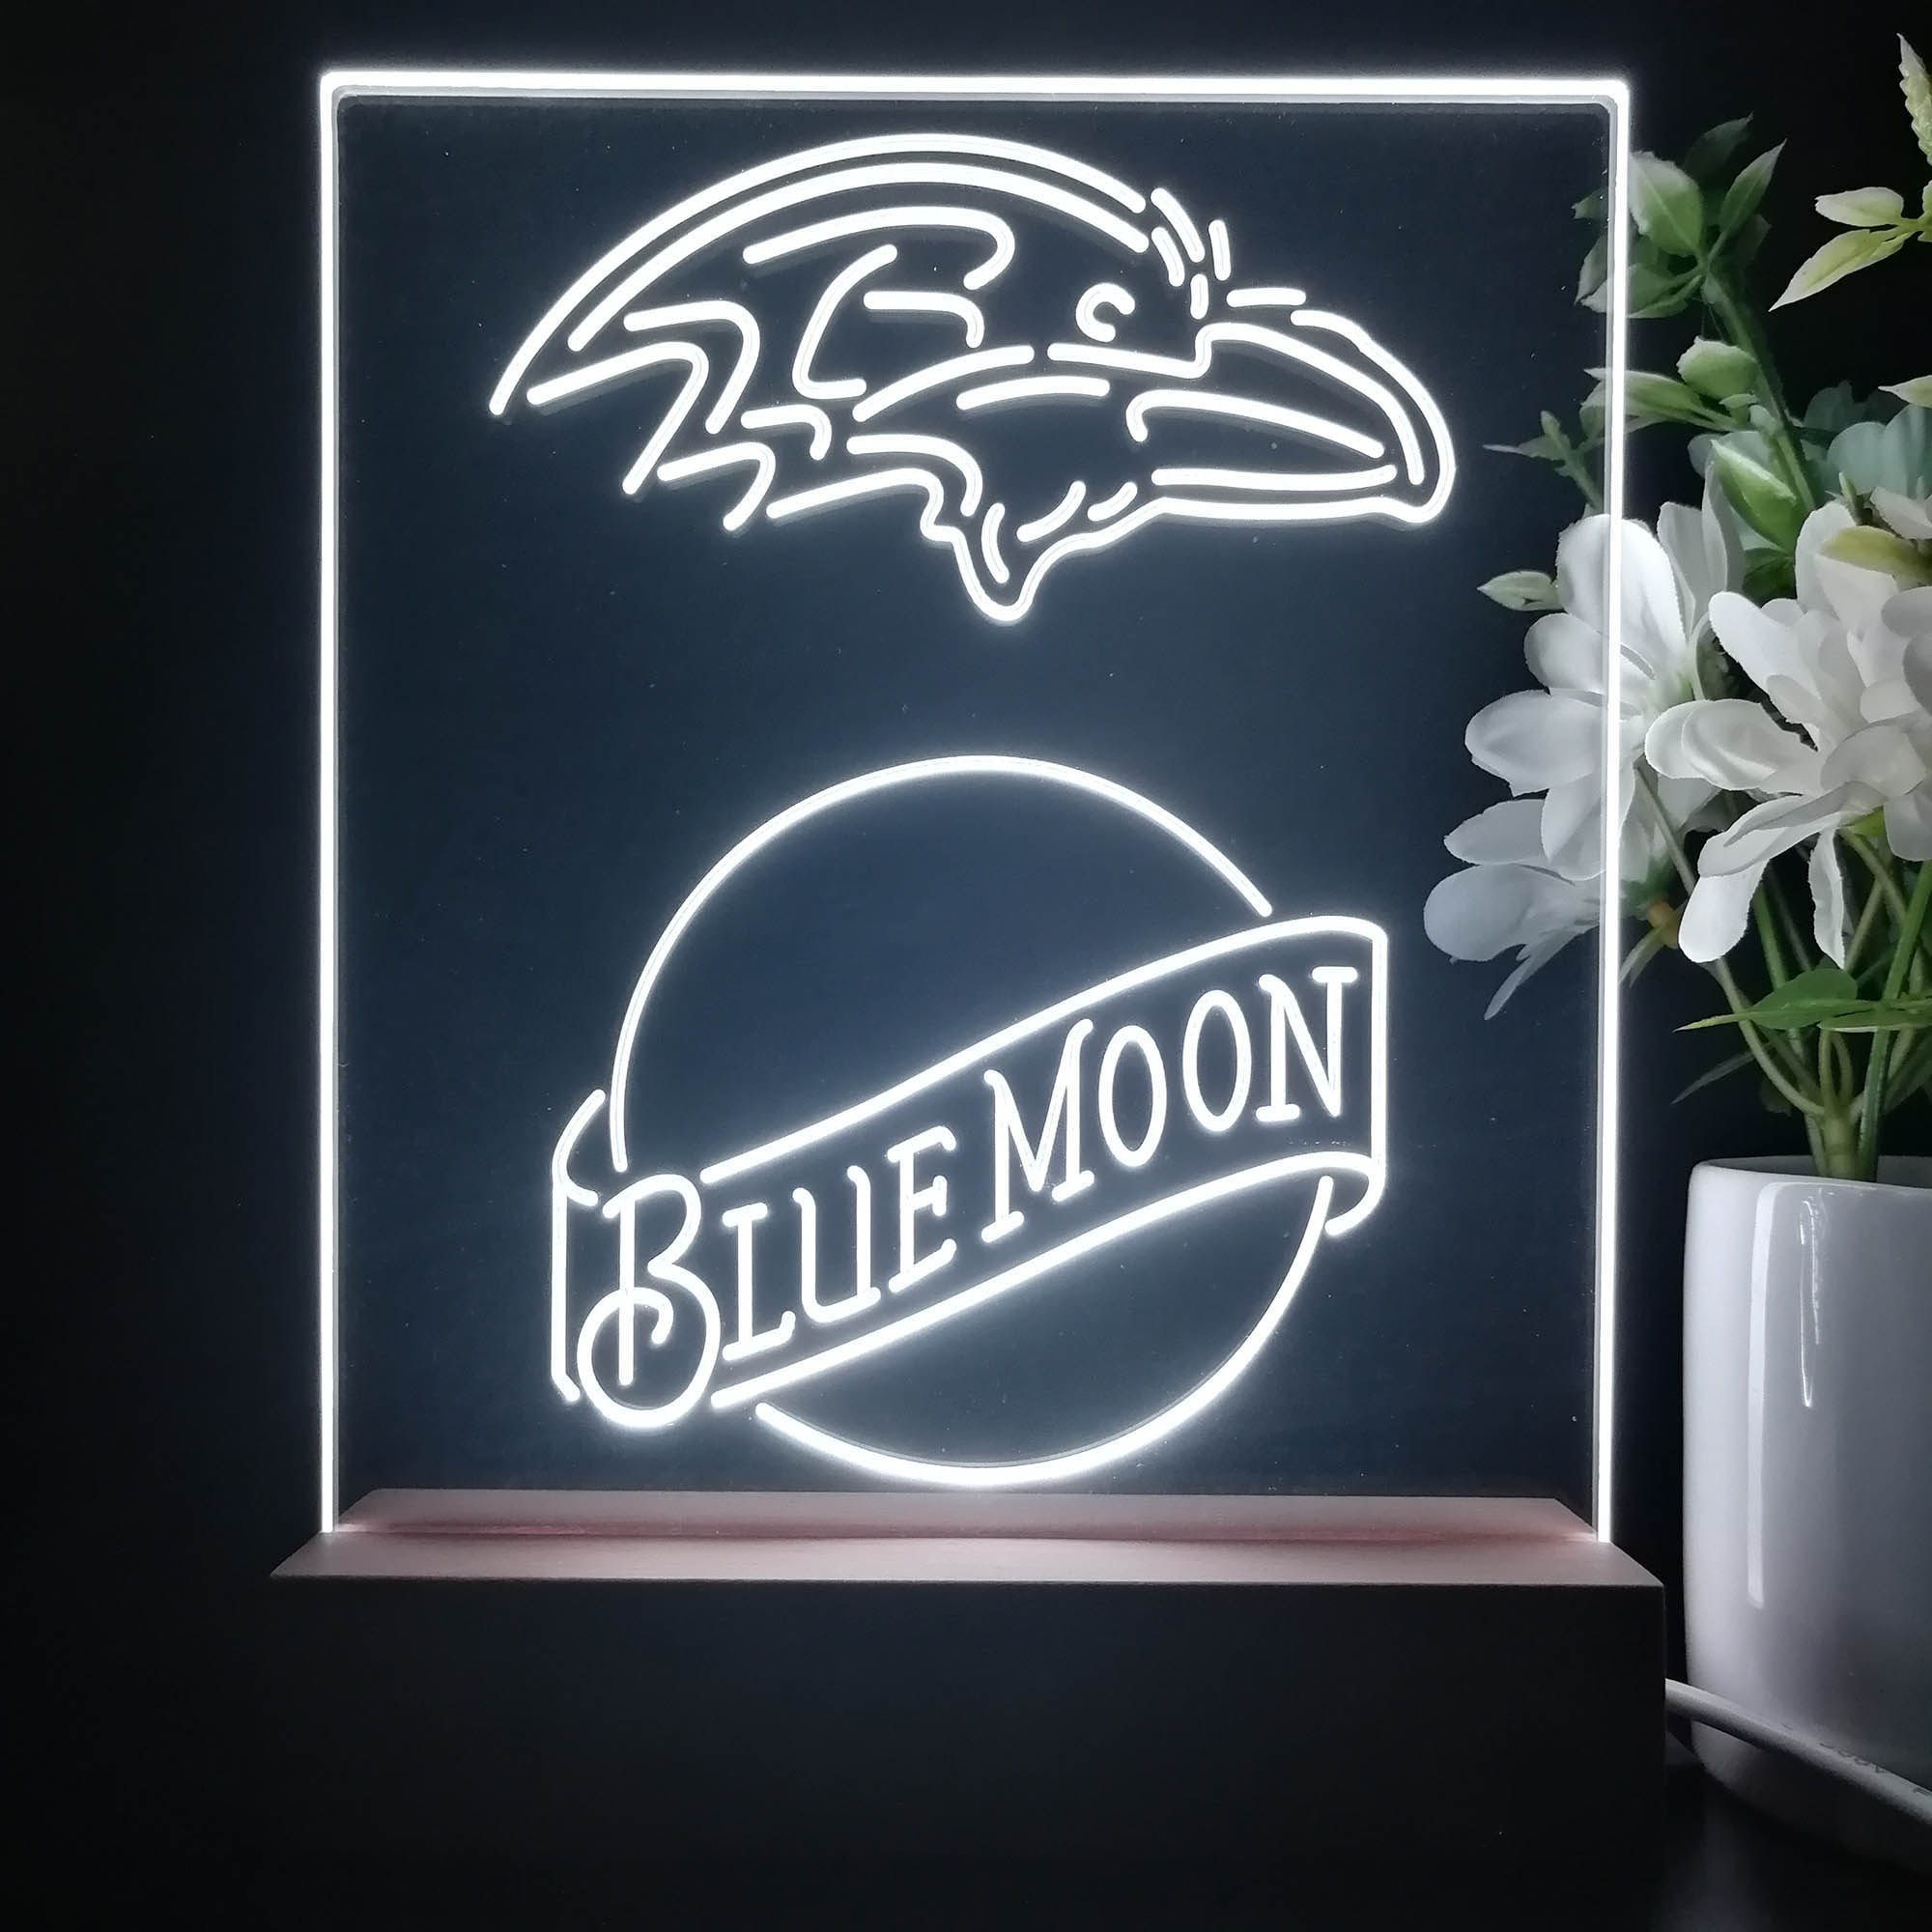 Baltimore Ravens Blue Moon Neon Sign Pub Bar Lamp